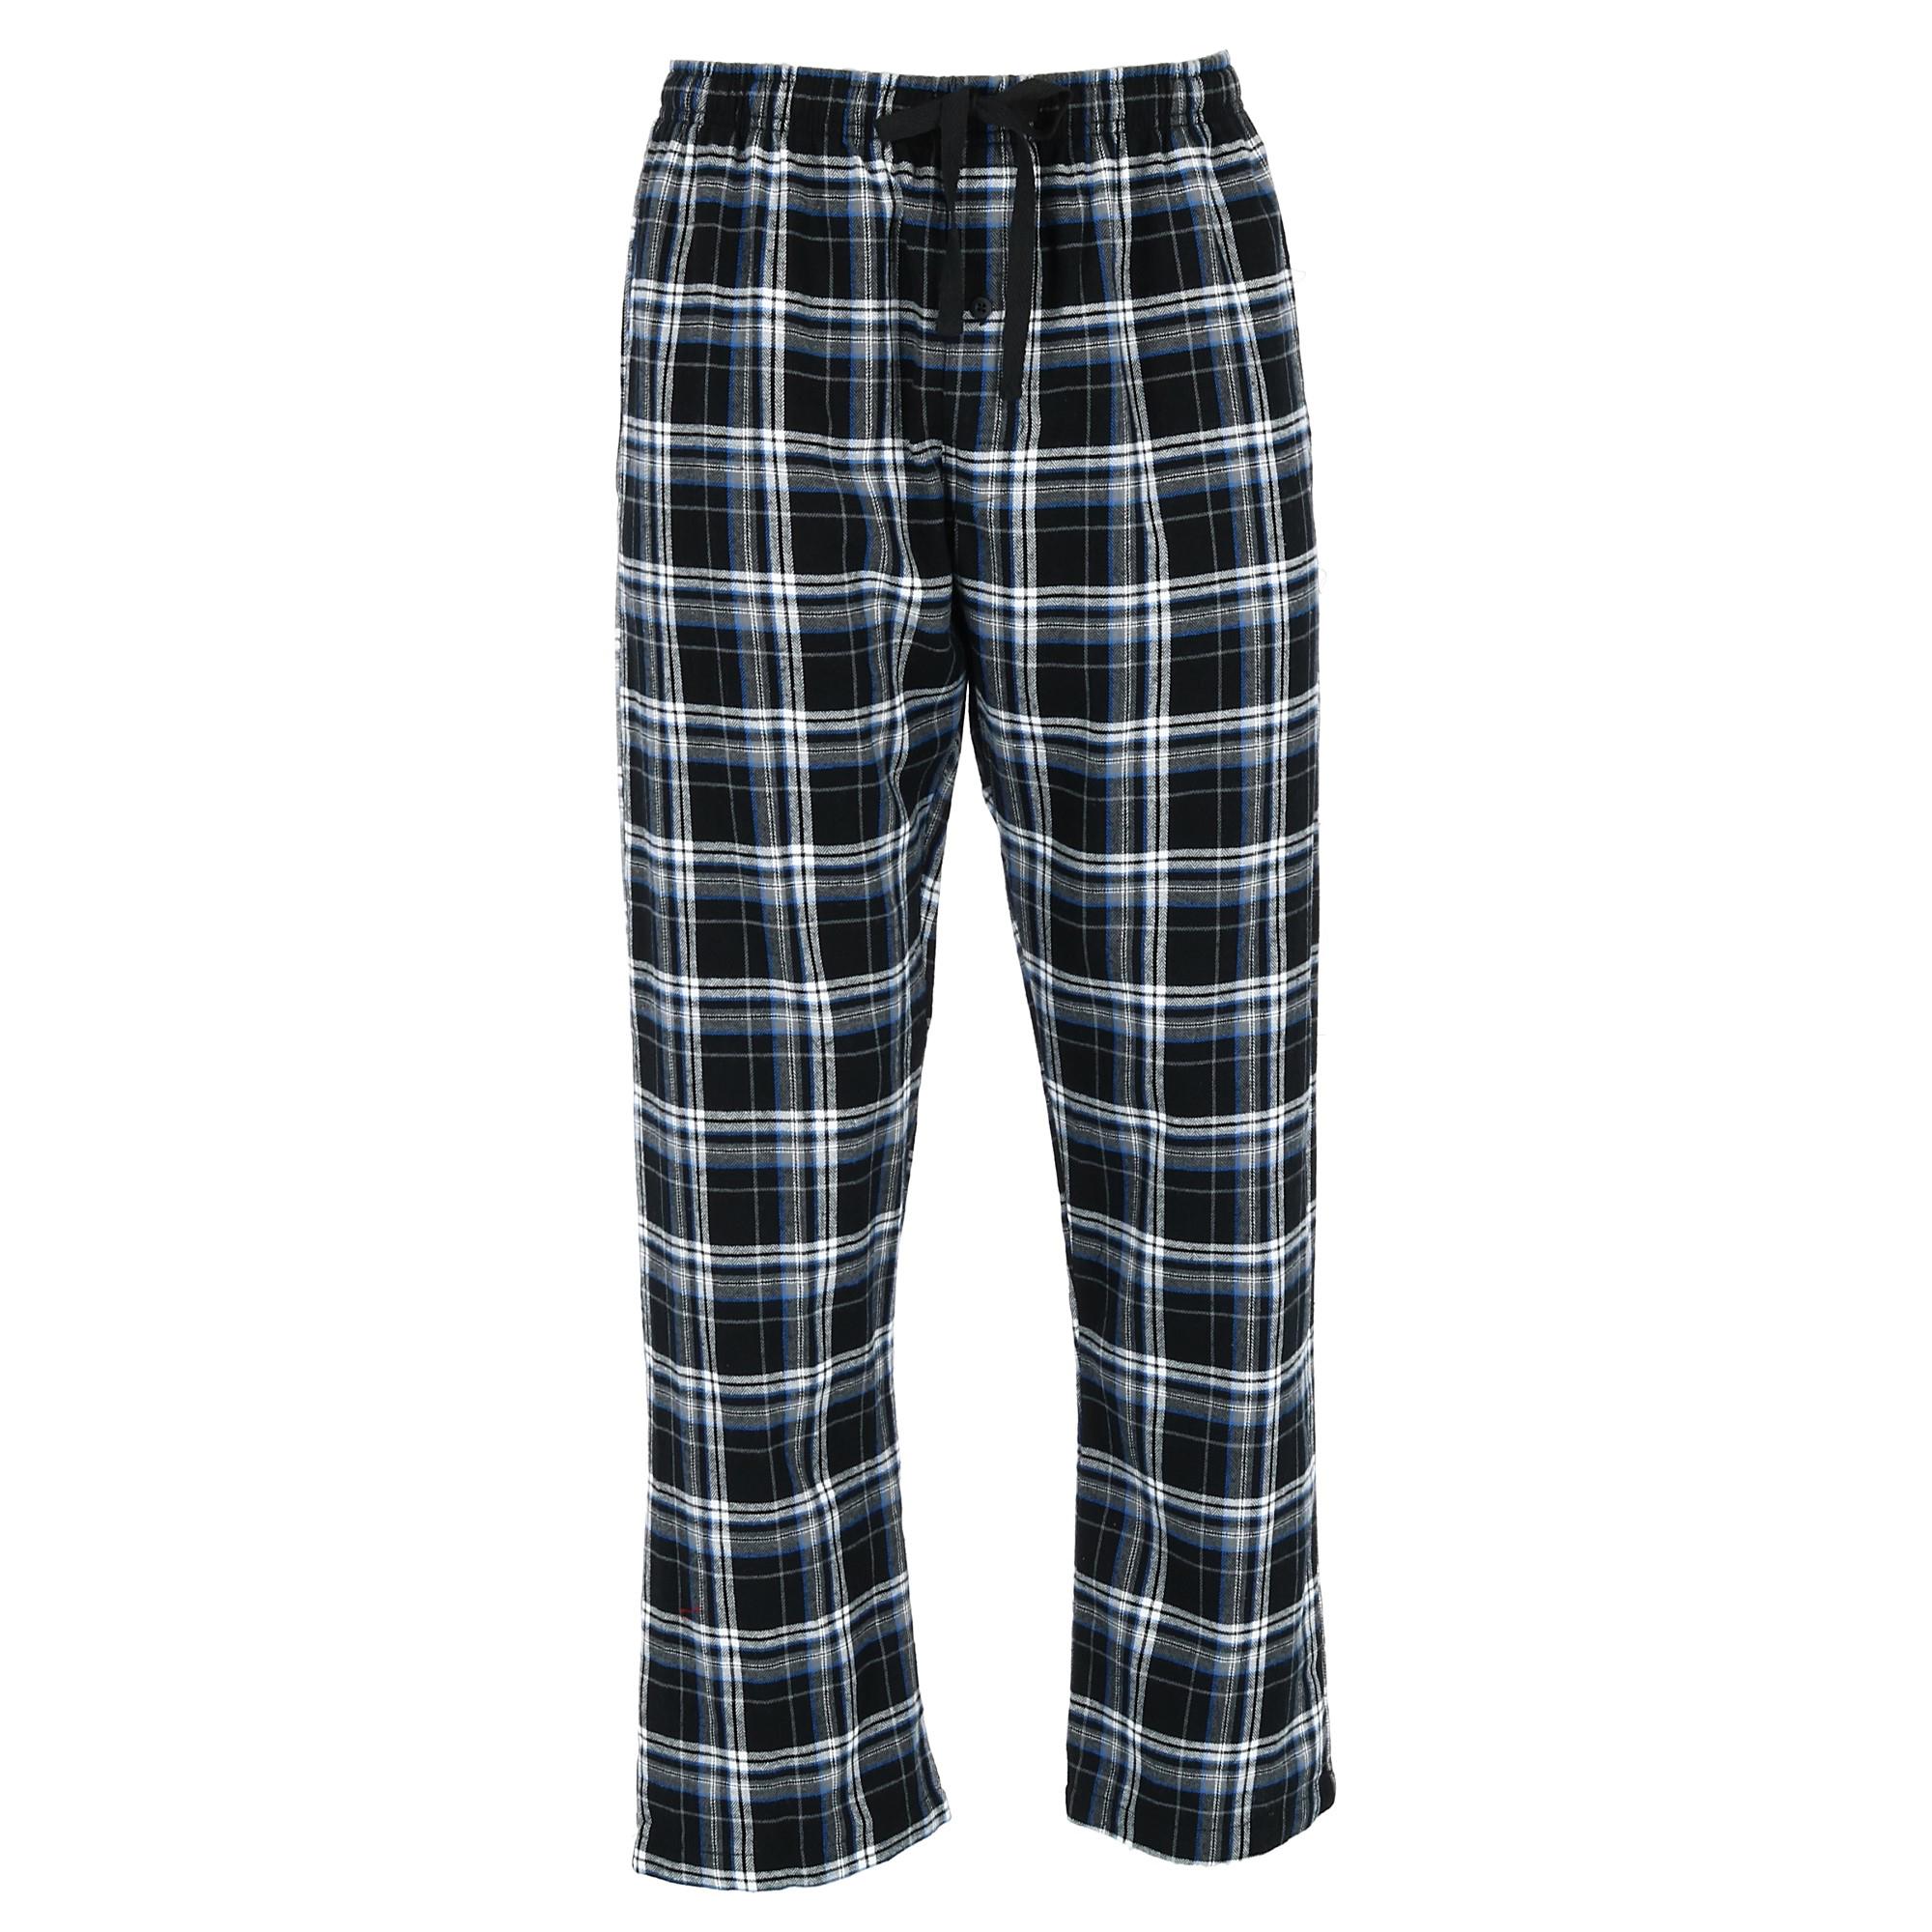 Hanes Men's Big and Tall Flannel Lounge Pajama Pants